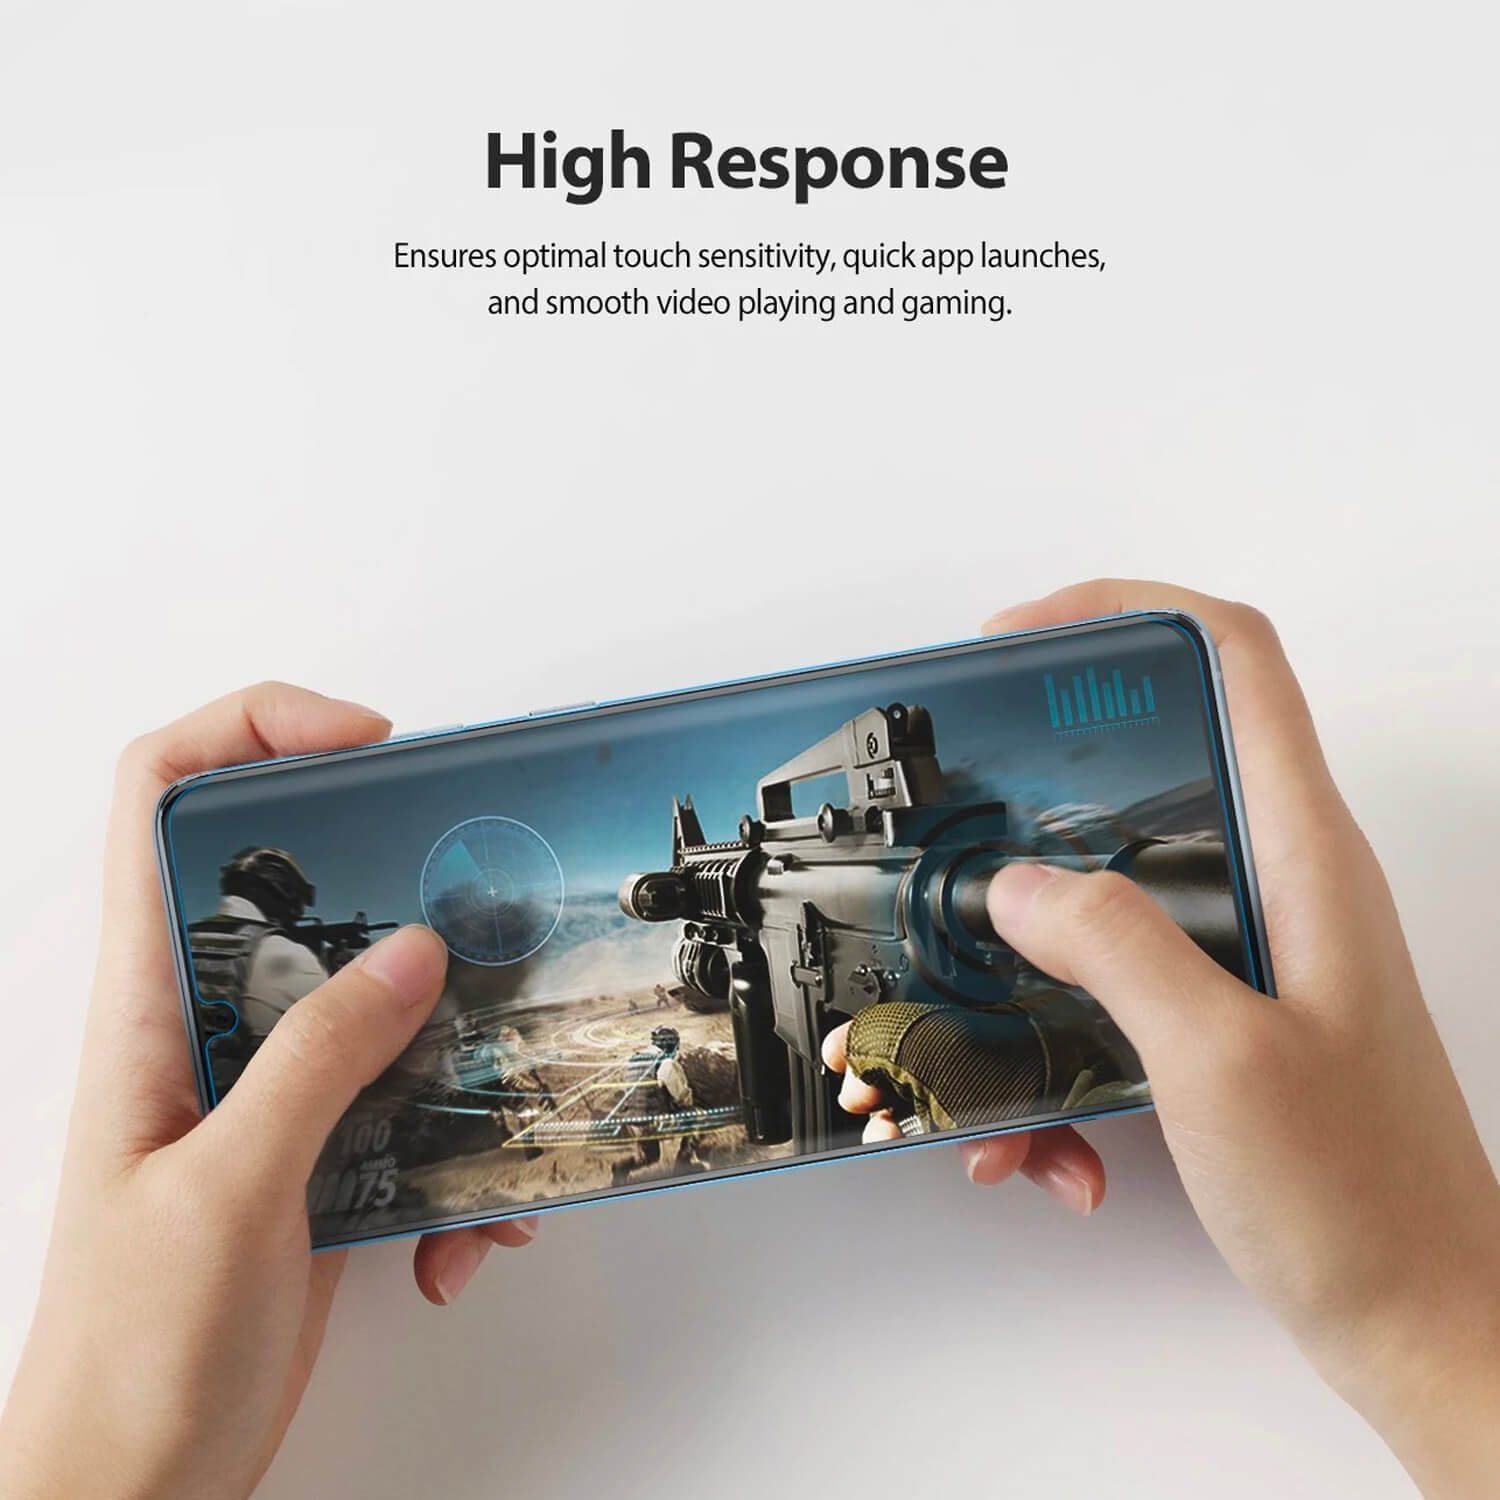 Ringke Samsung Galaxy S20 Ultra Screen Protector Dual Easy Film